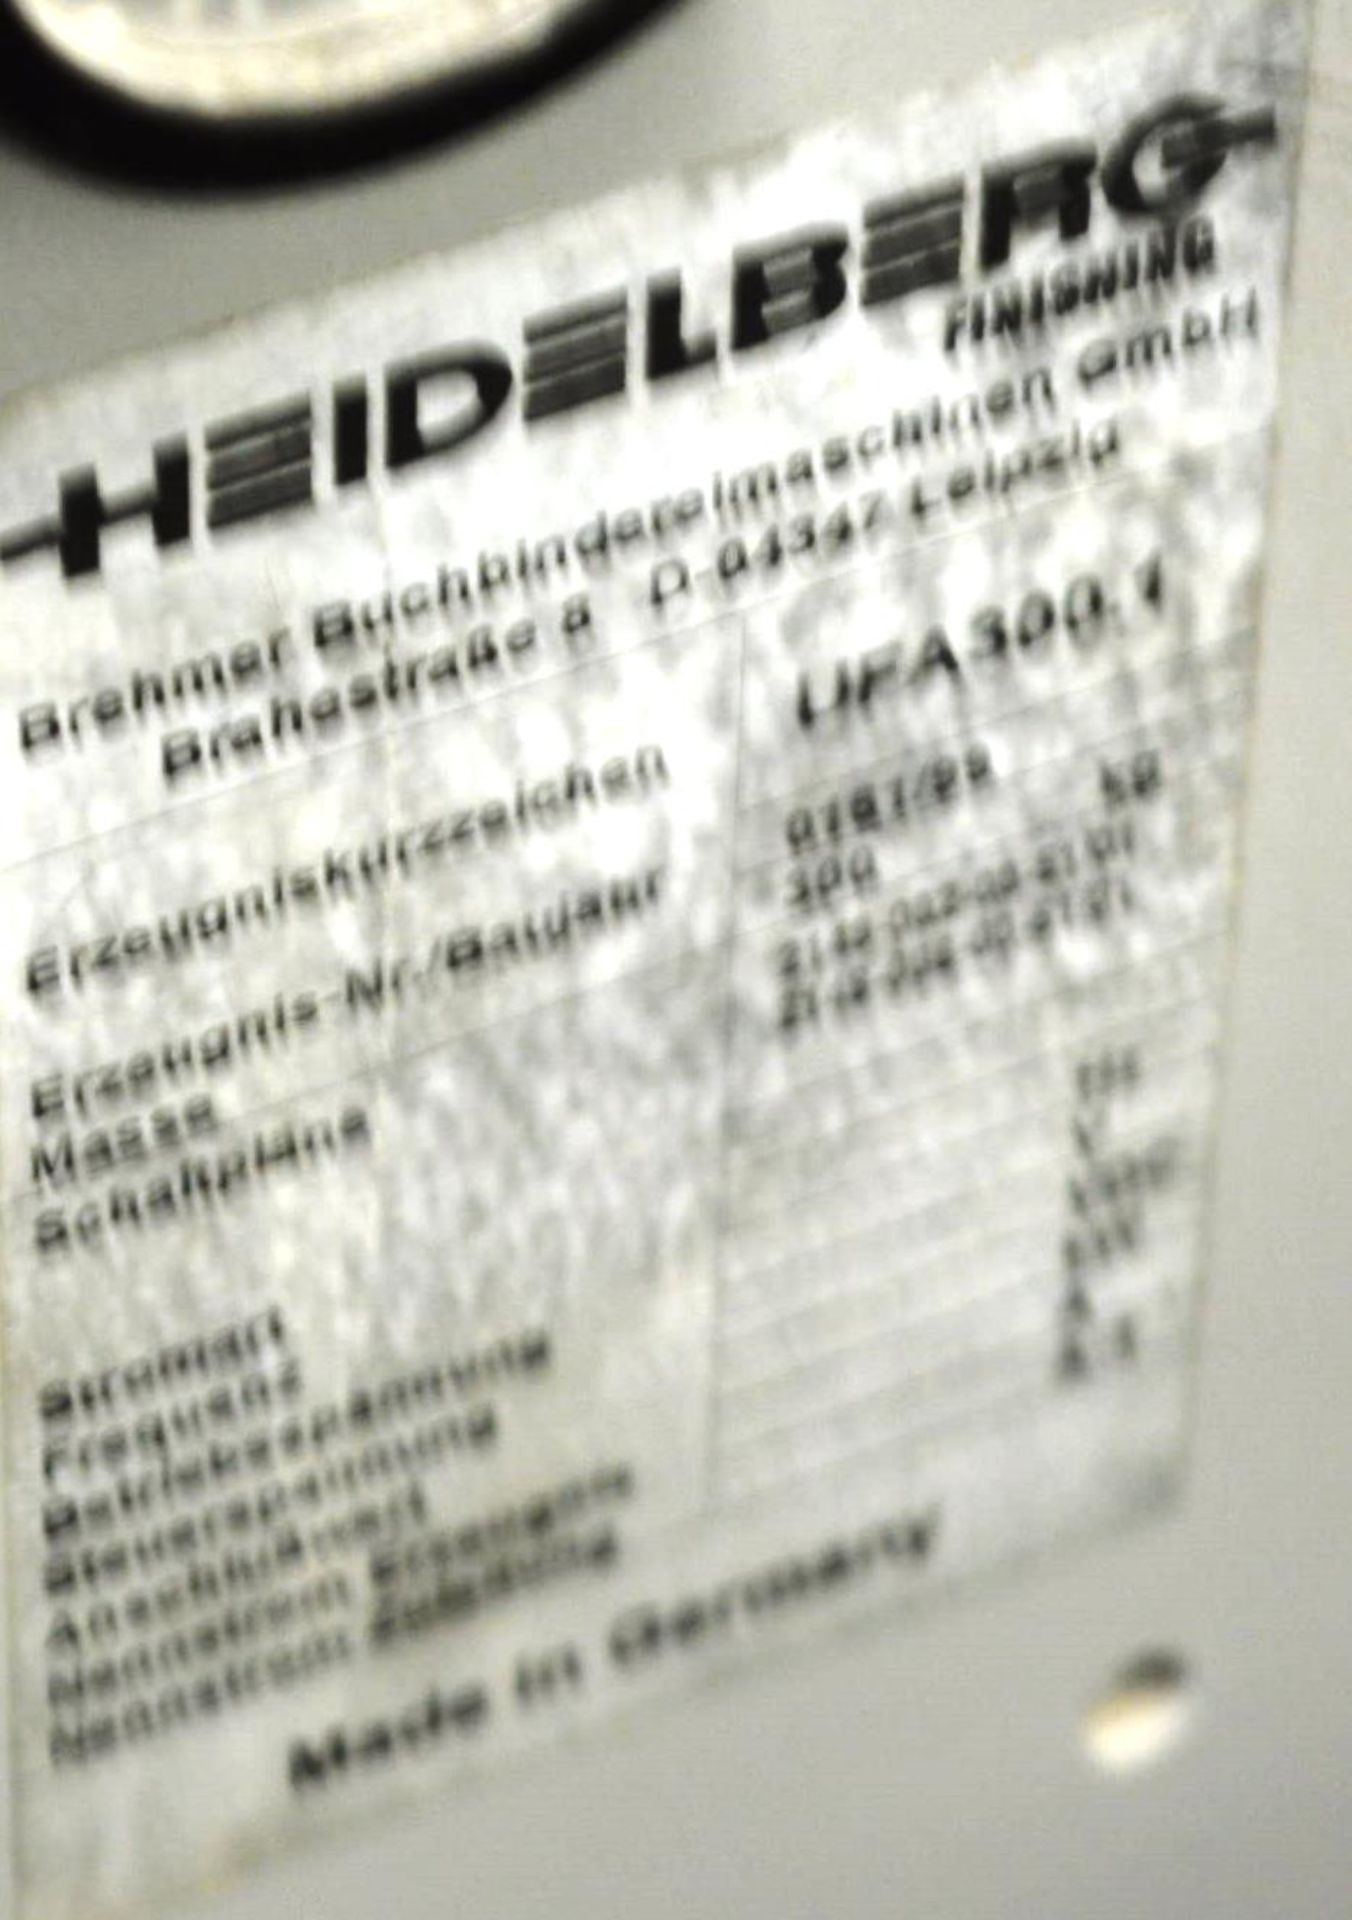 Heidelberg ST 3001.1 6+1 SADDLE STITCHING LINE, comprising: - six feed units, UFA300.1 cover feeder, - Image 9 of 11